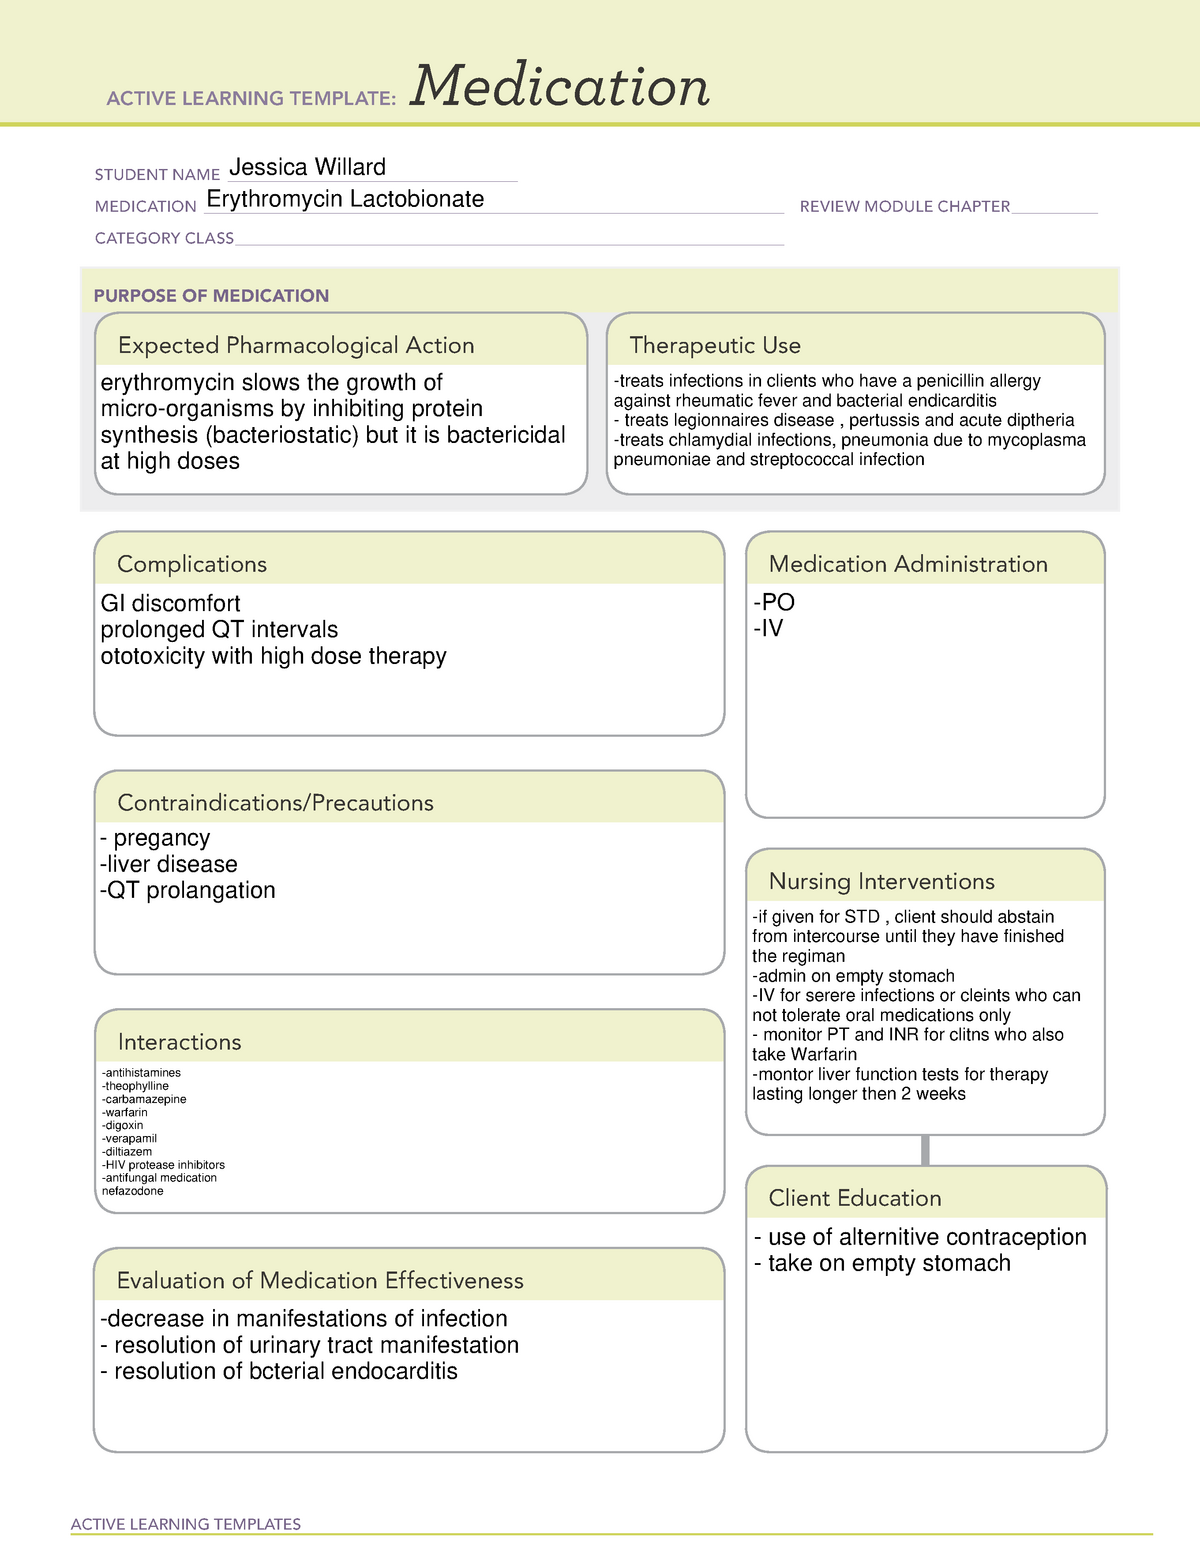 erythromycin-lactobionate-active-learning-templates-medication